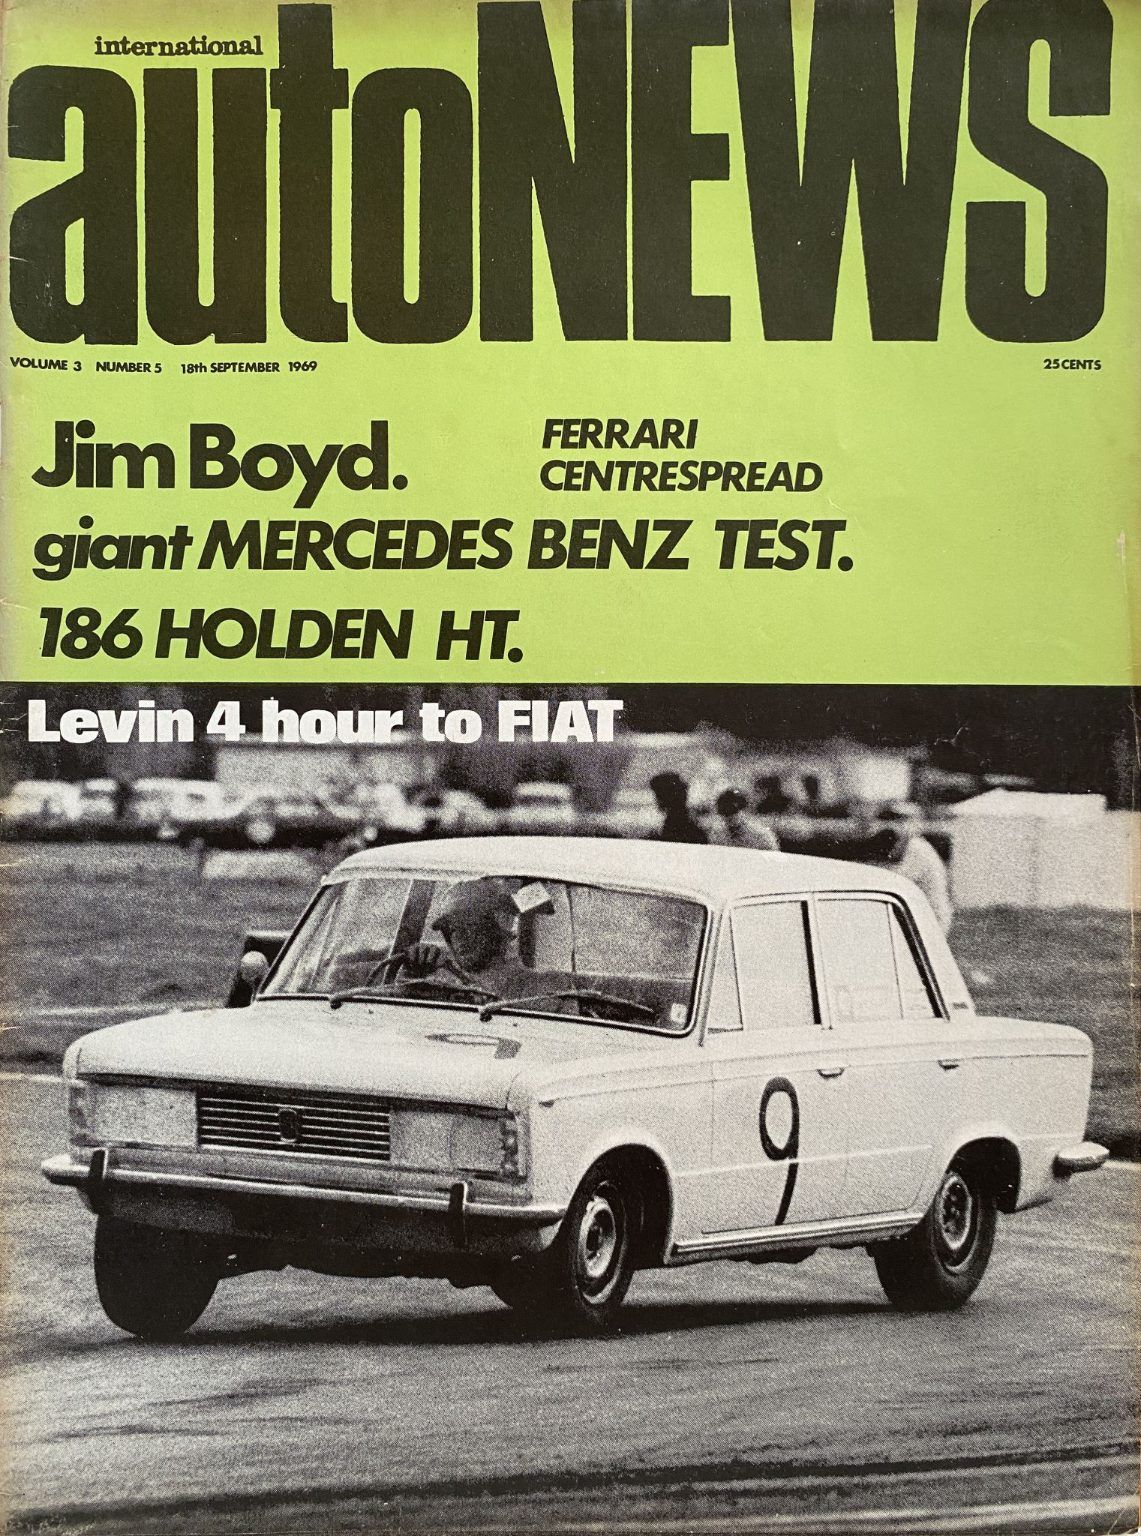 OLD MAGAZINE: International Auto News - Vol. 3, Number 5, 18th September 1969